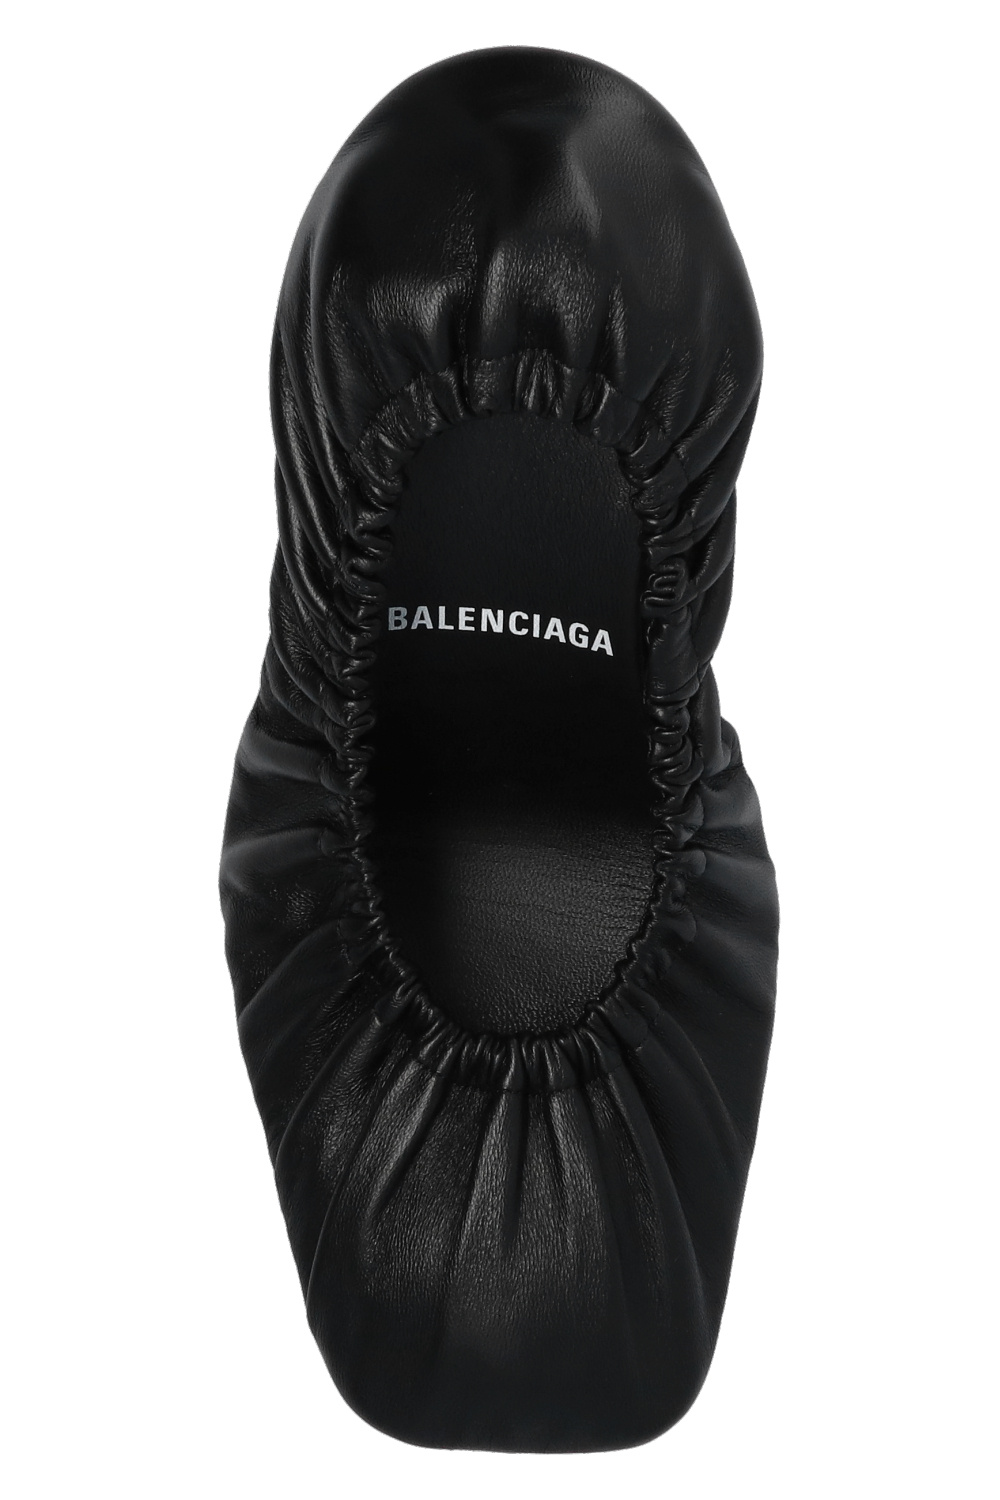 Balenciaga Premiata low top Steven sneakers